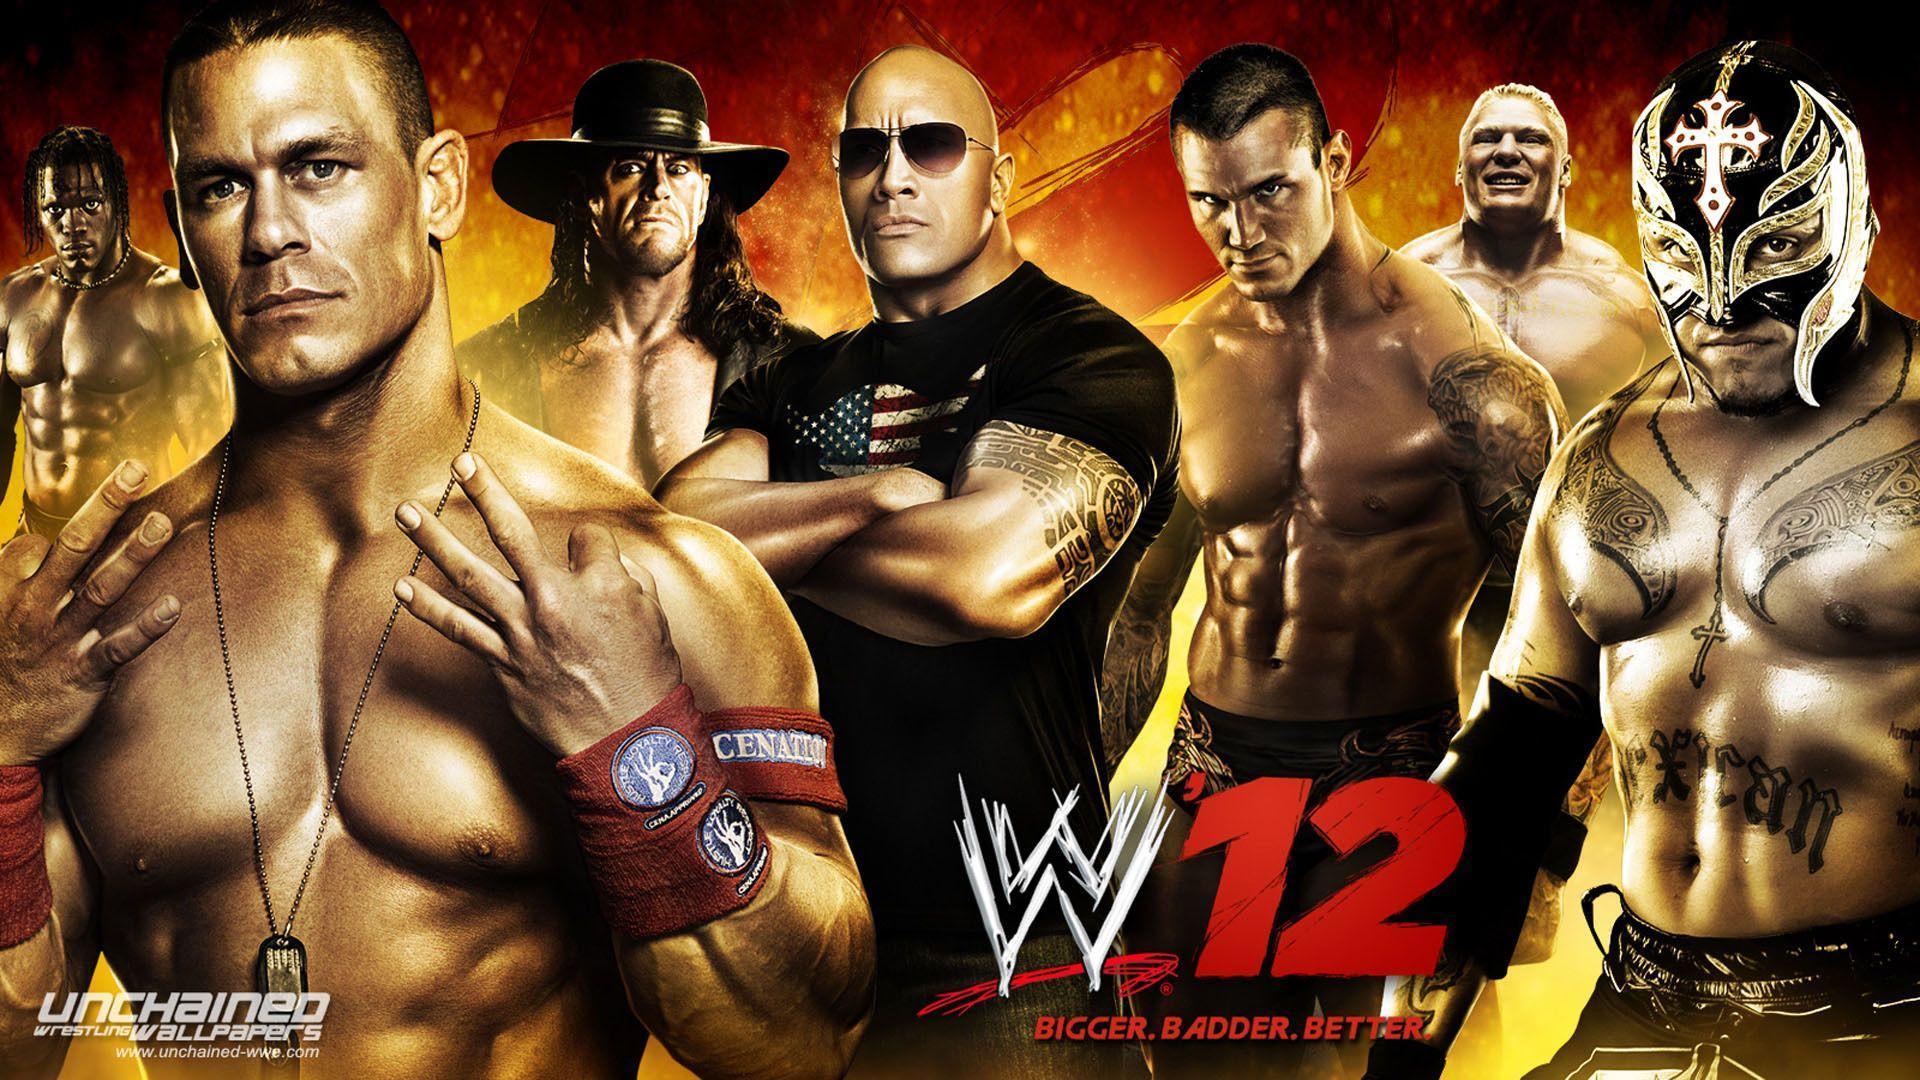 John Cena Wallpaper Image Photo Picture Background